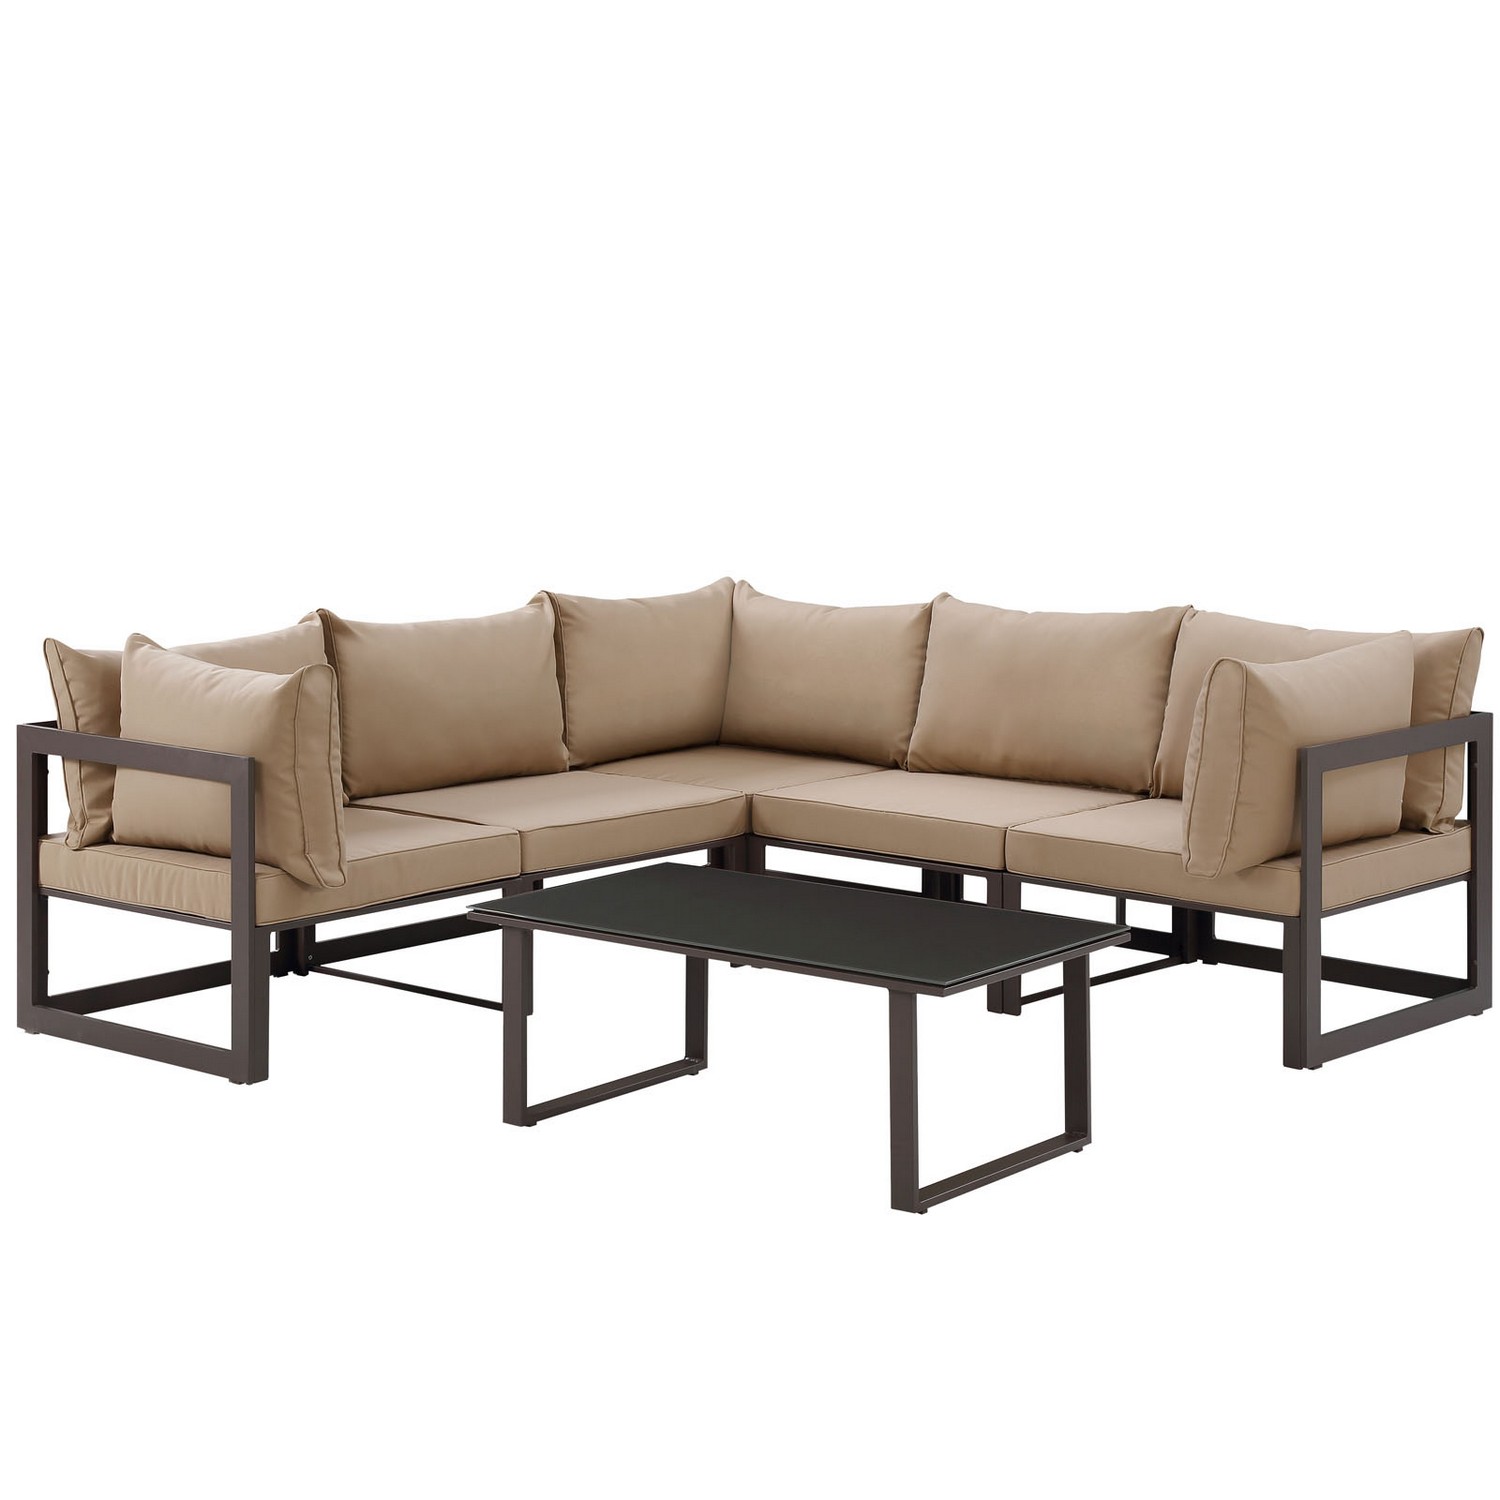 Modway Fortuna 6 Piece Outdoor Patio Sectional Sofa Set - Brown/Mocha